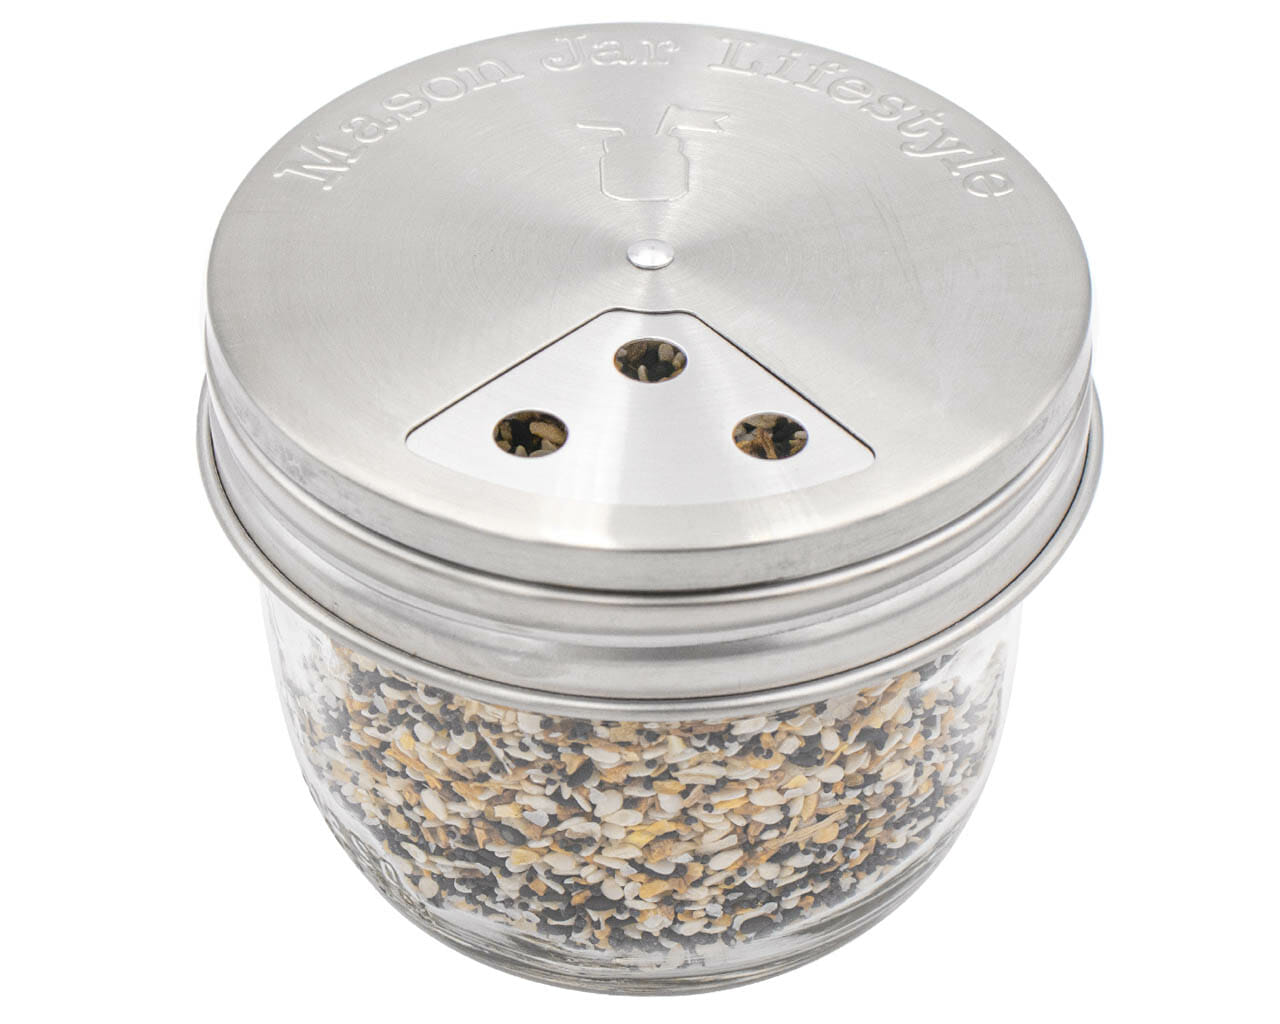 Jarware Stainless Steel Spice Shaker, Wide Mouth Mason Jar Spice Lid